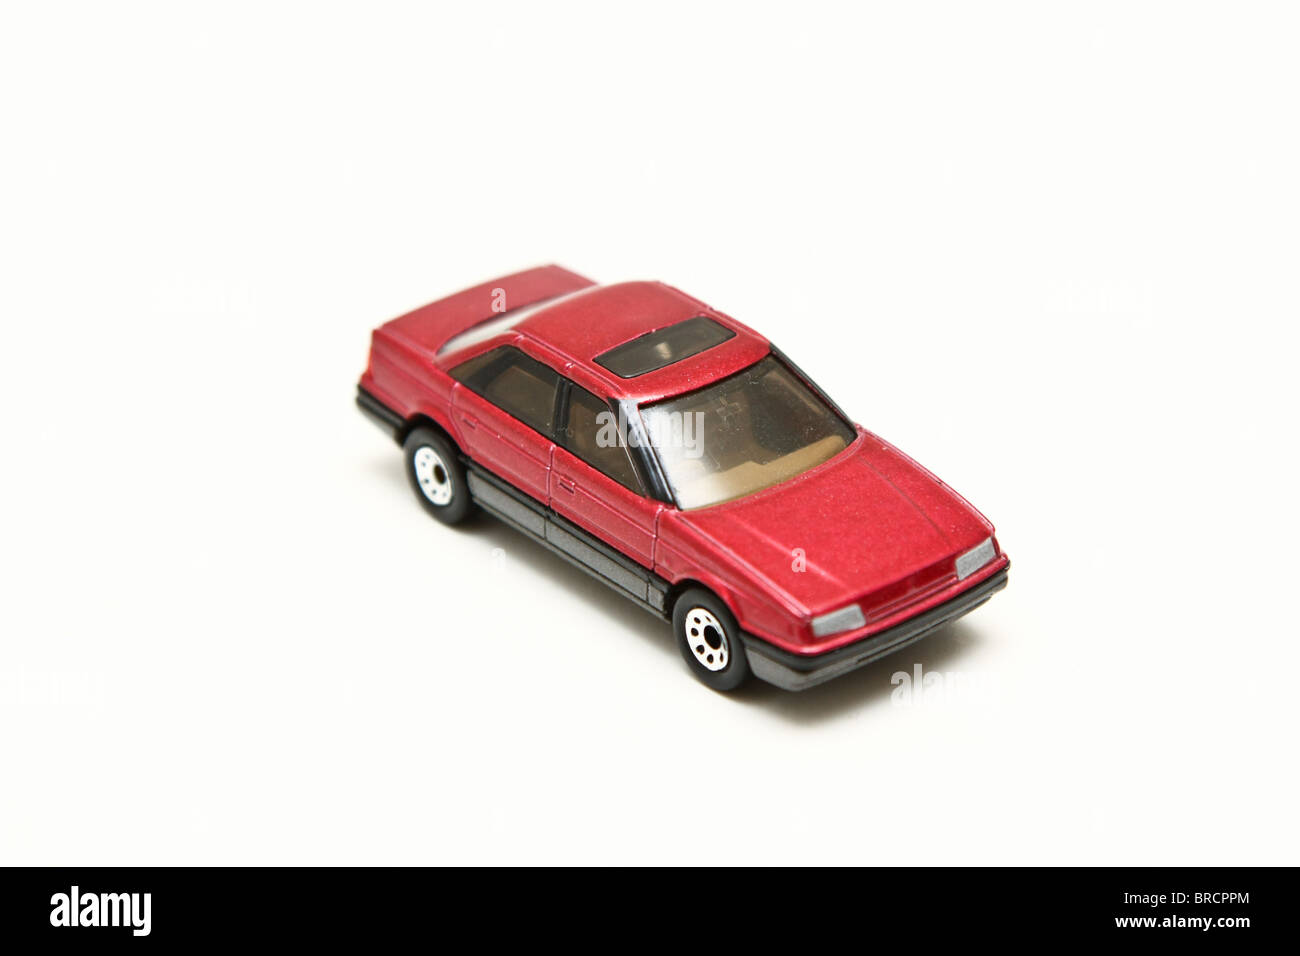 coche de juguete rojo Foto de stock